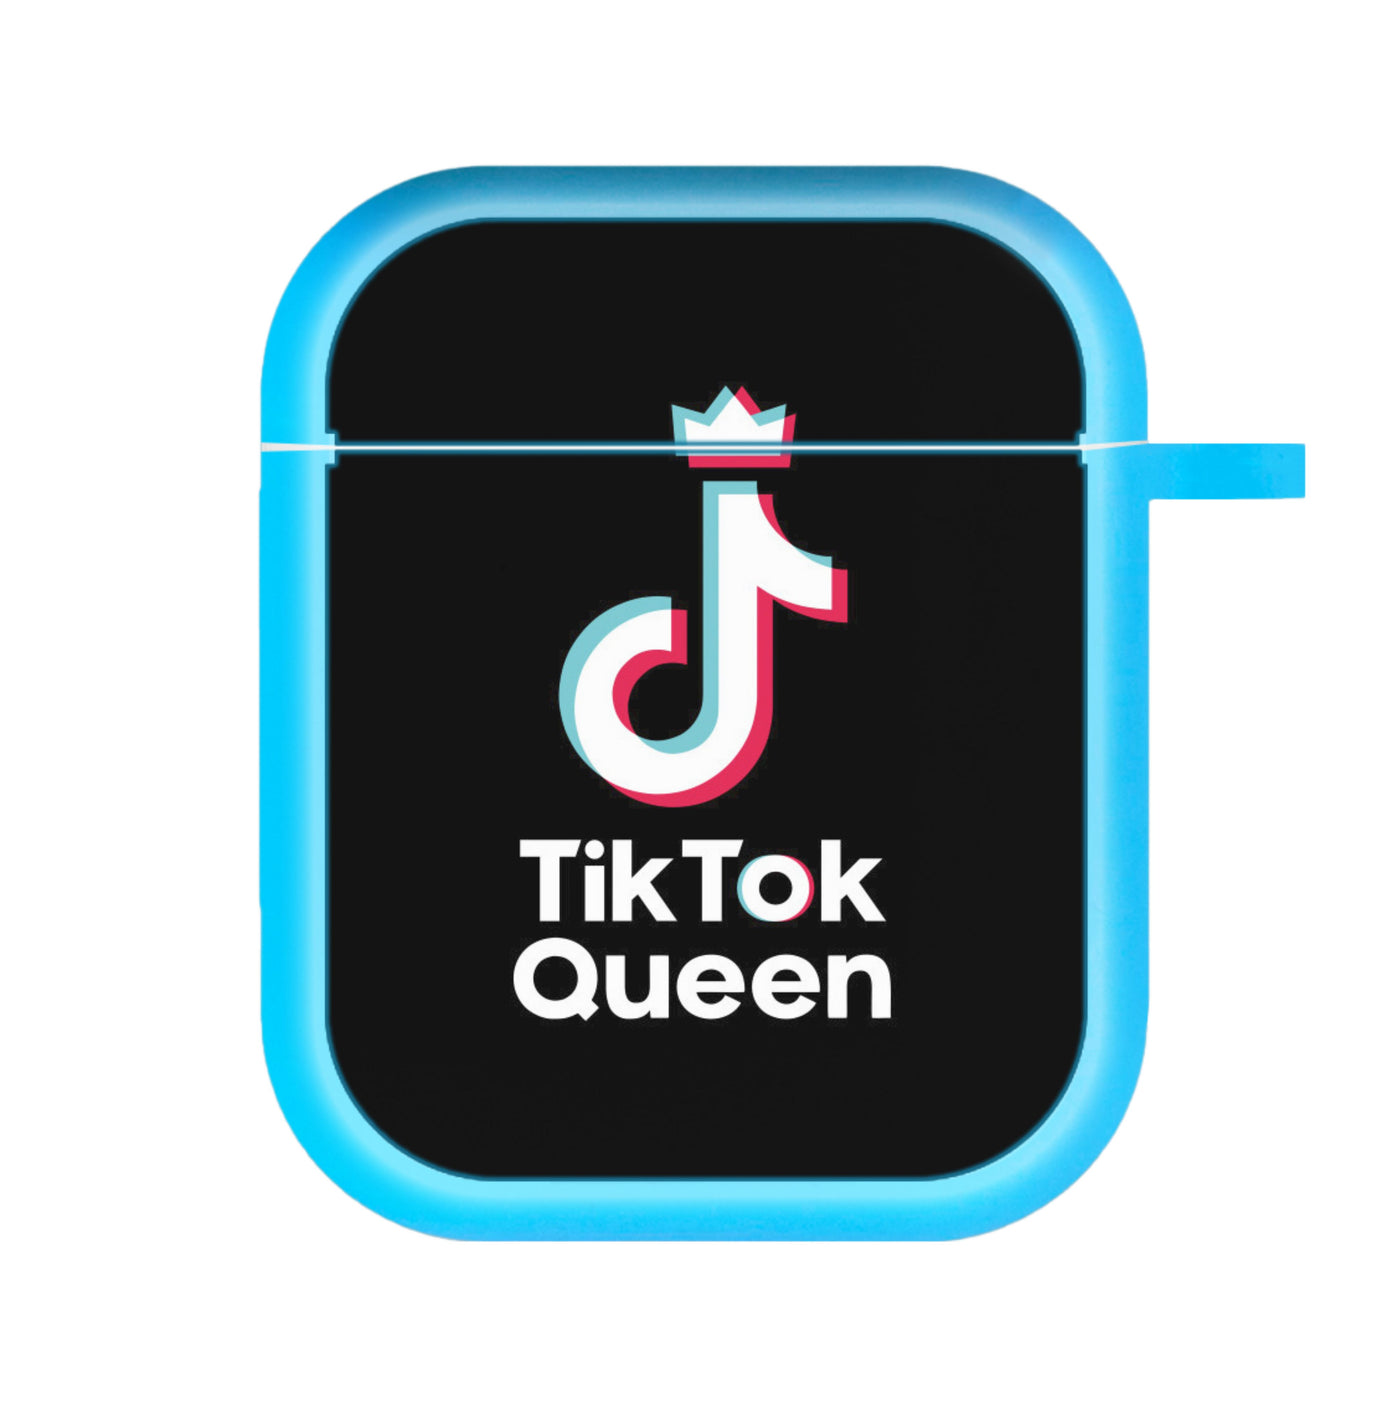 TikTok Queen AirPods Case